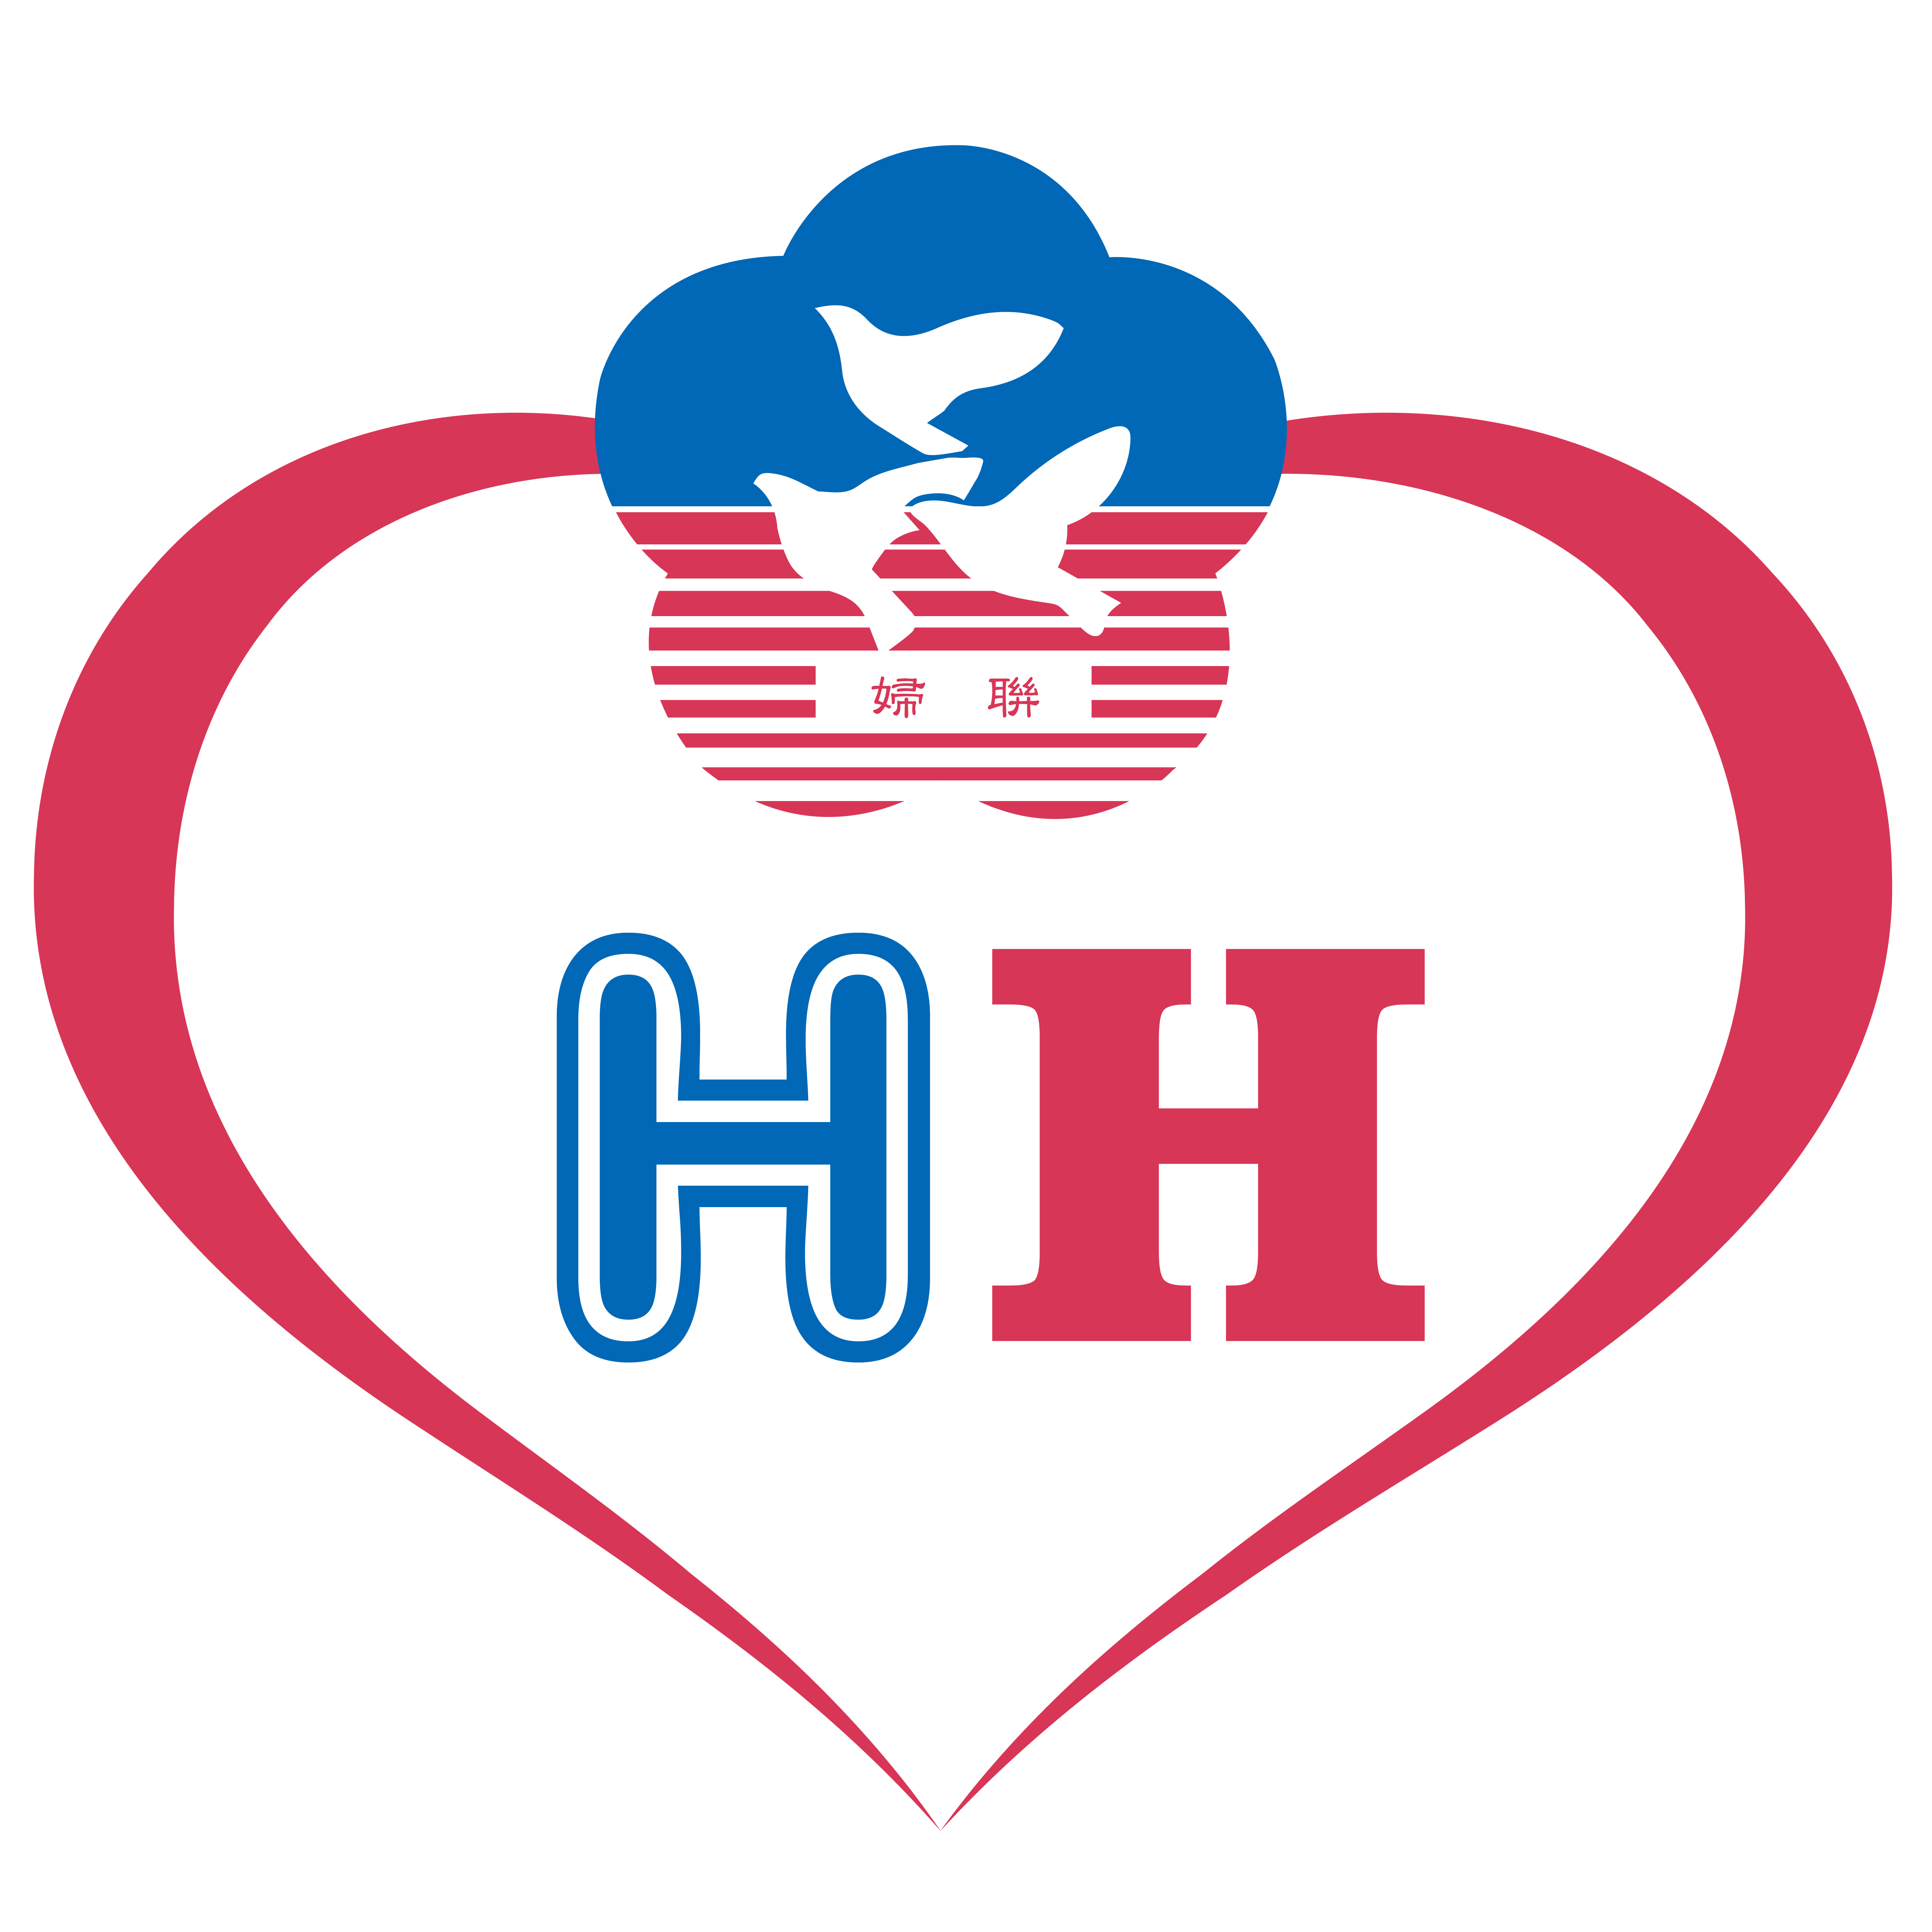 NWLHHF-new logo-1091118-婦聯色號-白底-1280-01